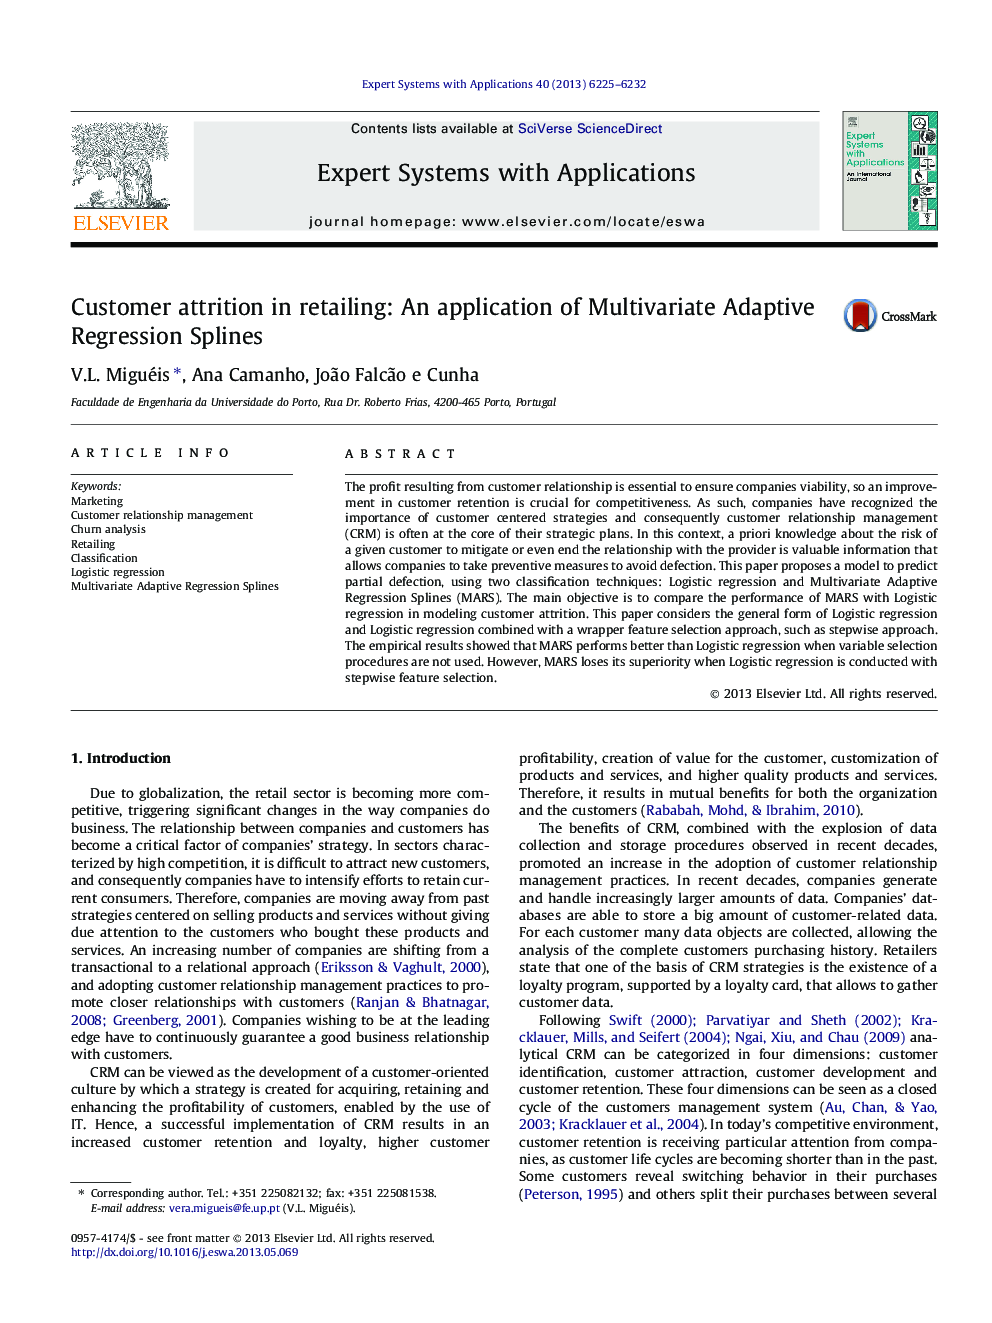 Customer attrition in retailing: An application of Multivariate Adaptive Regression Splines